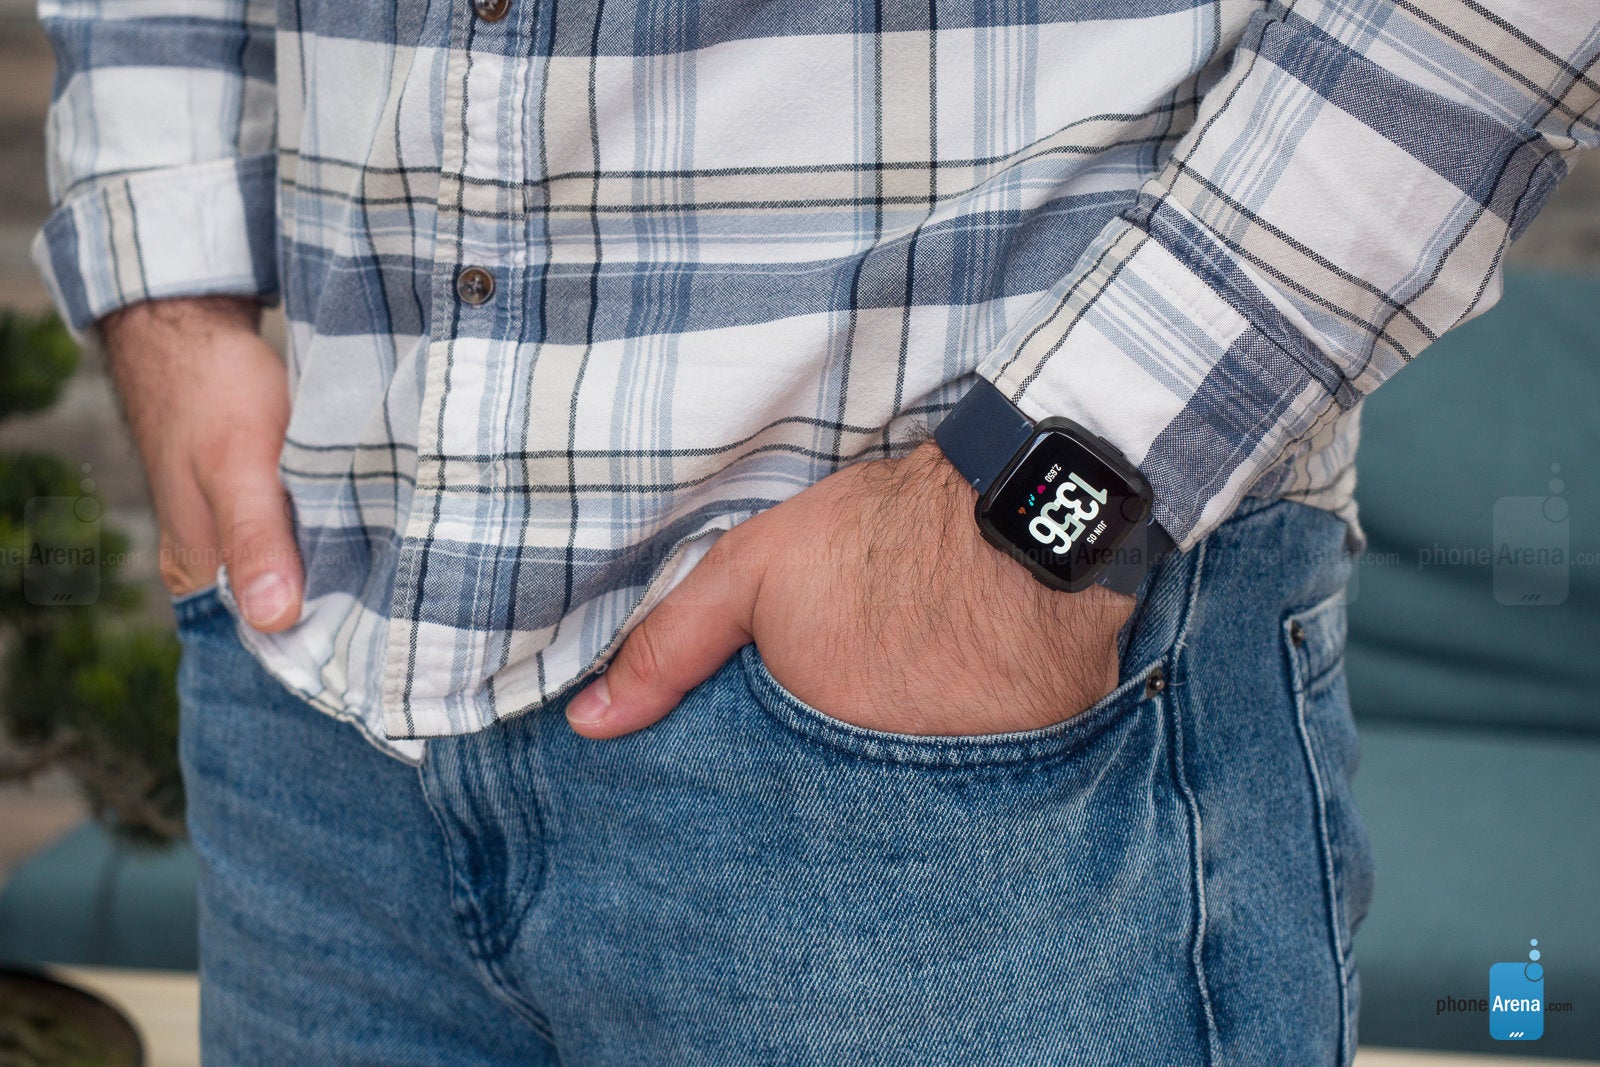 Fitbit Versa smartwatch Review